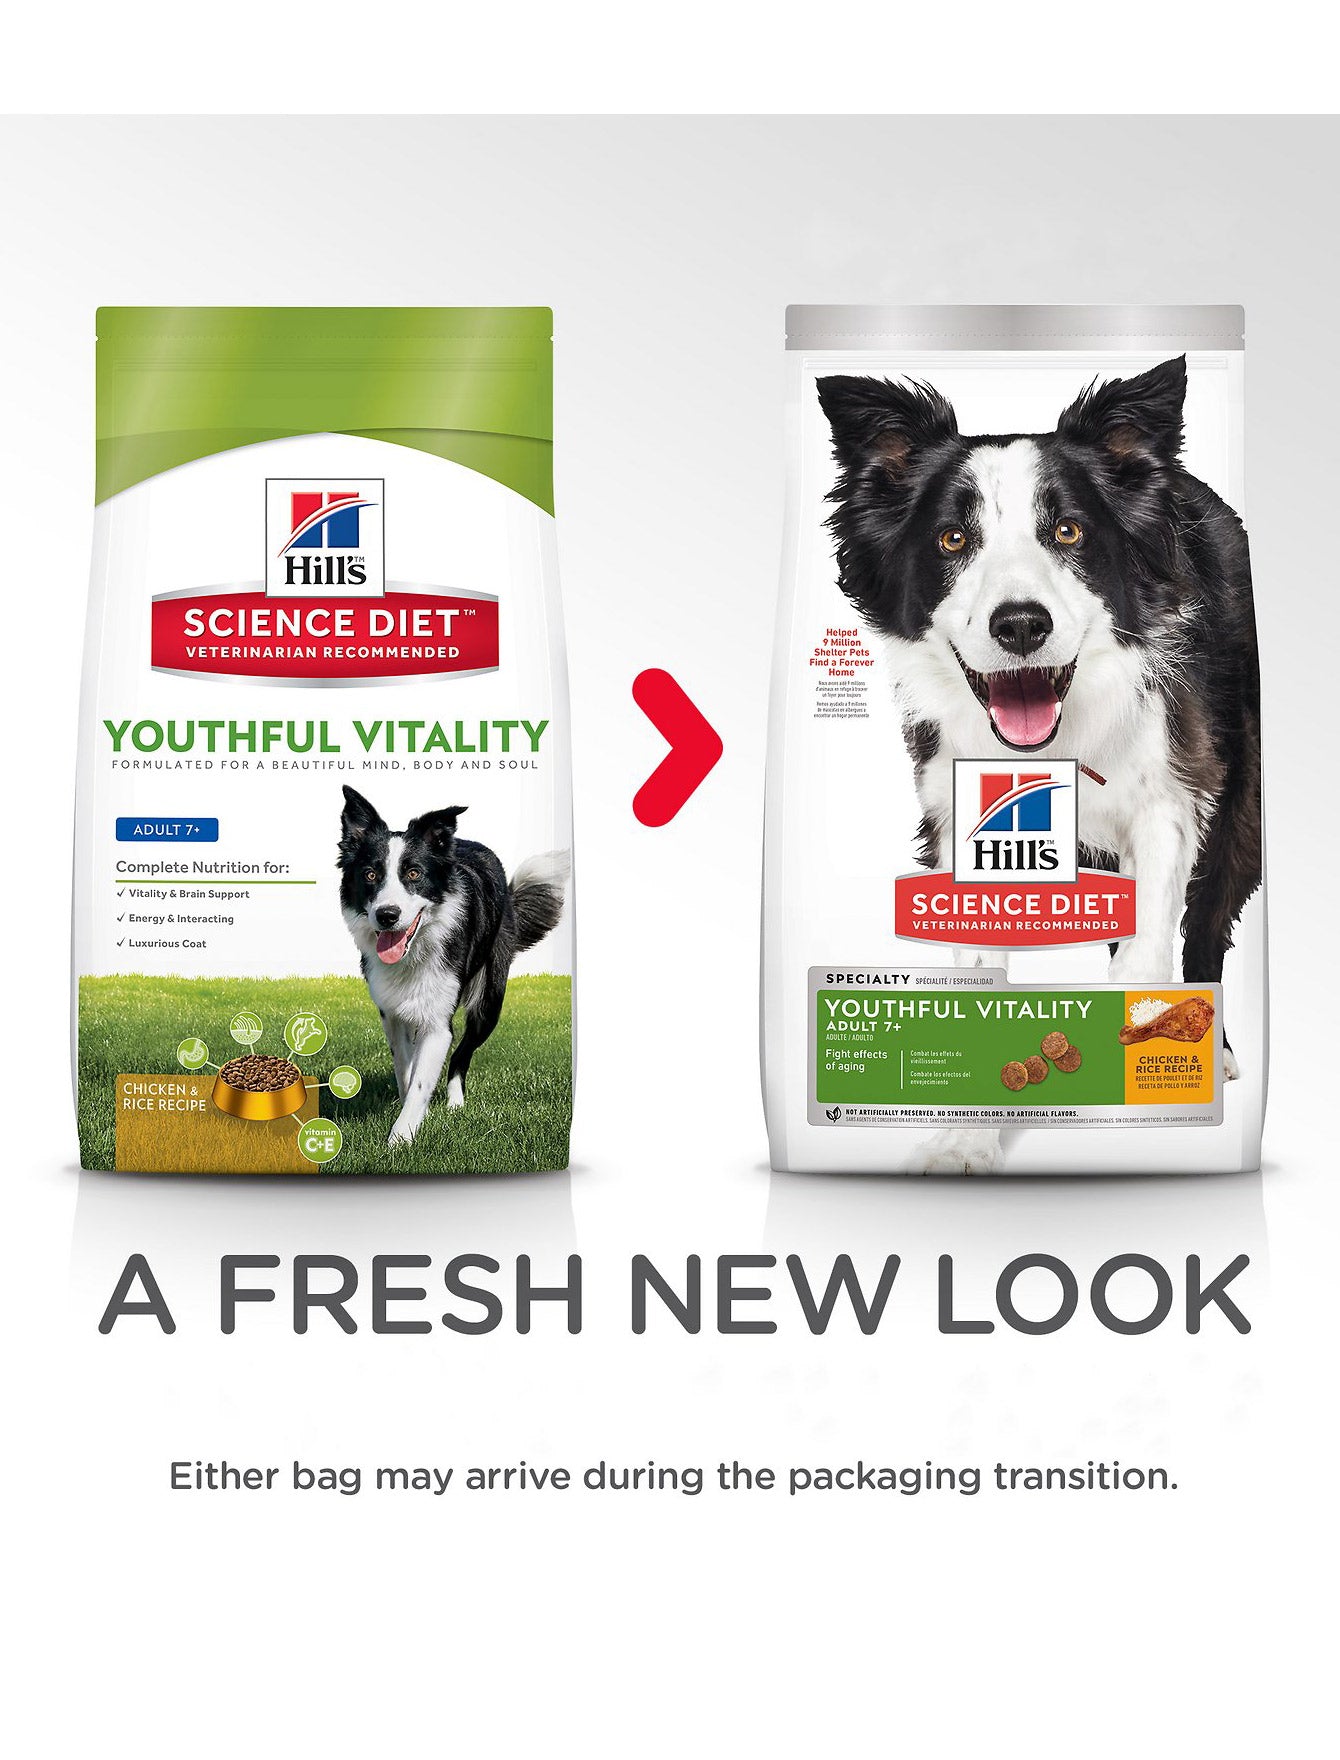 youthful vitality dog food